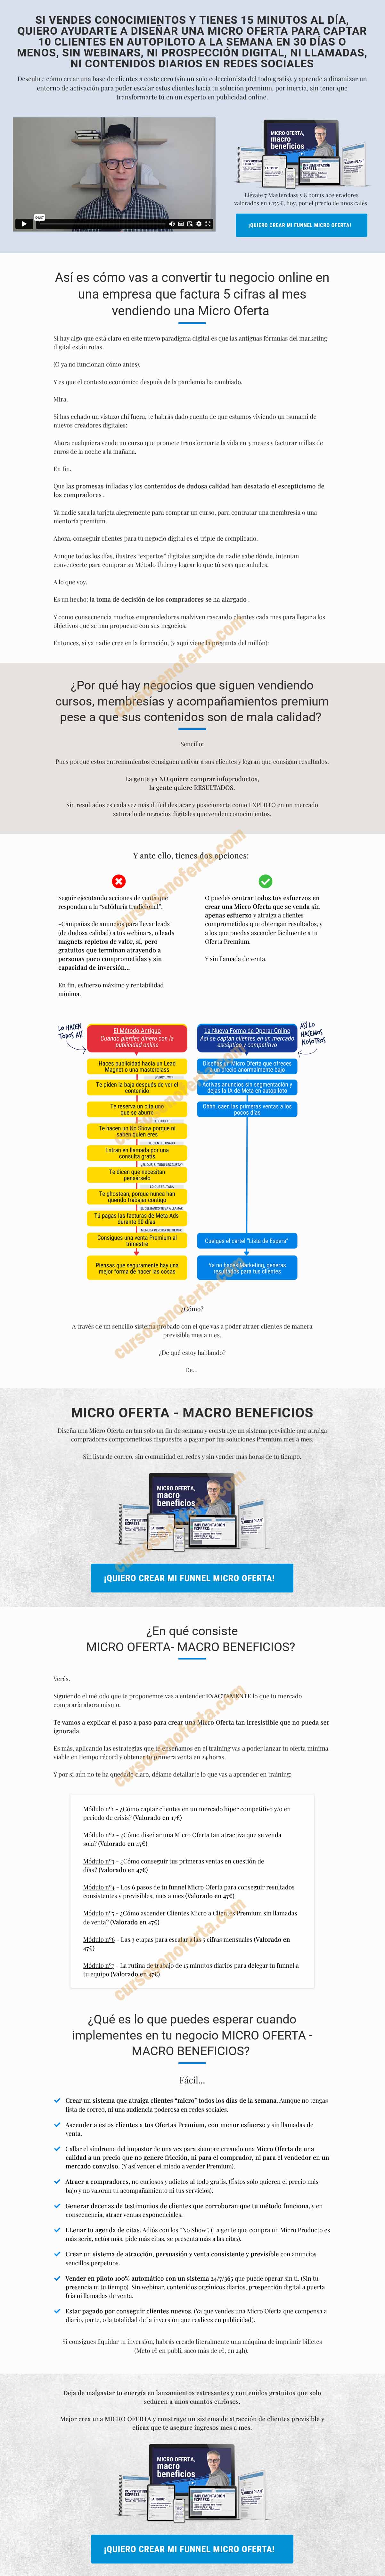 Micro Ofertas Macro Beneficios - franck scipion